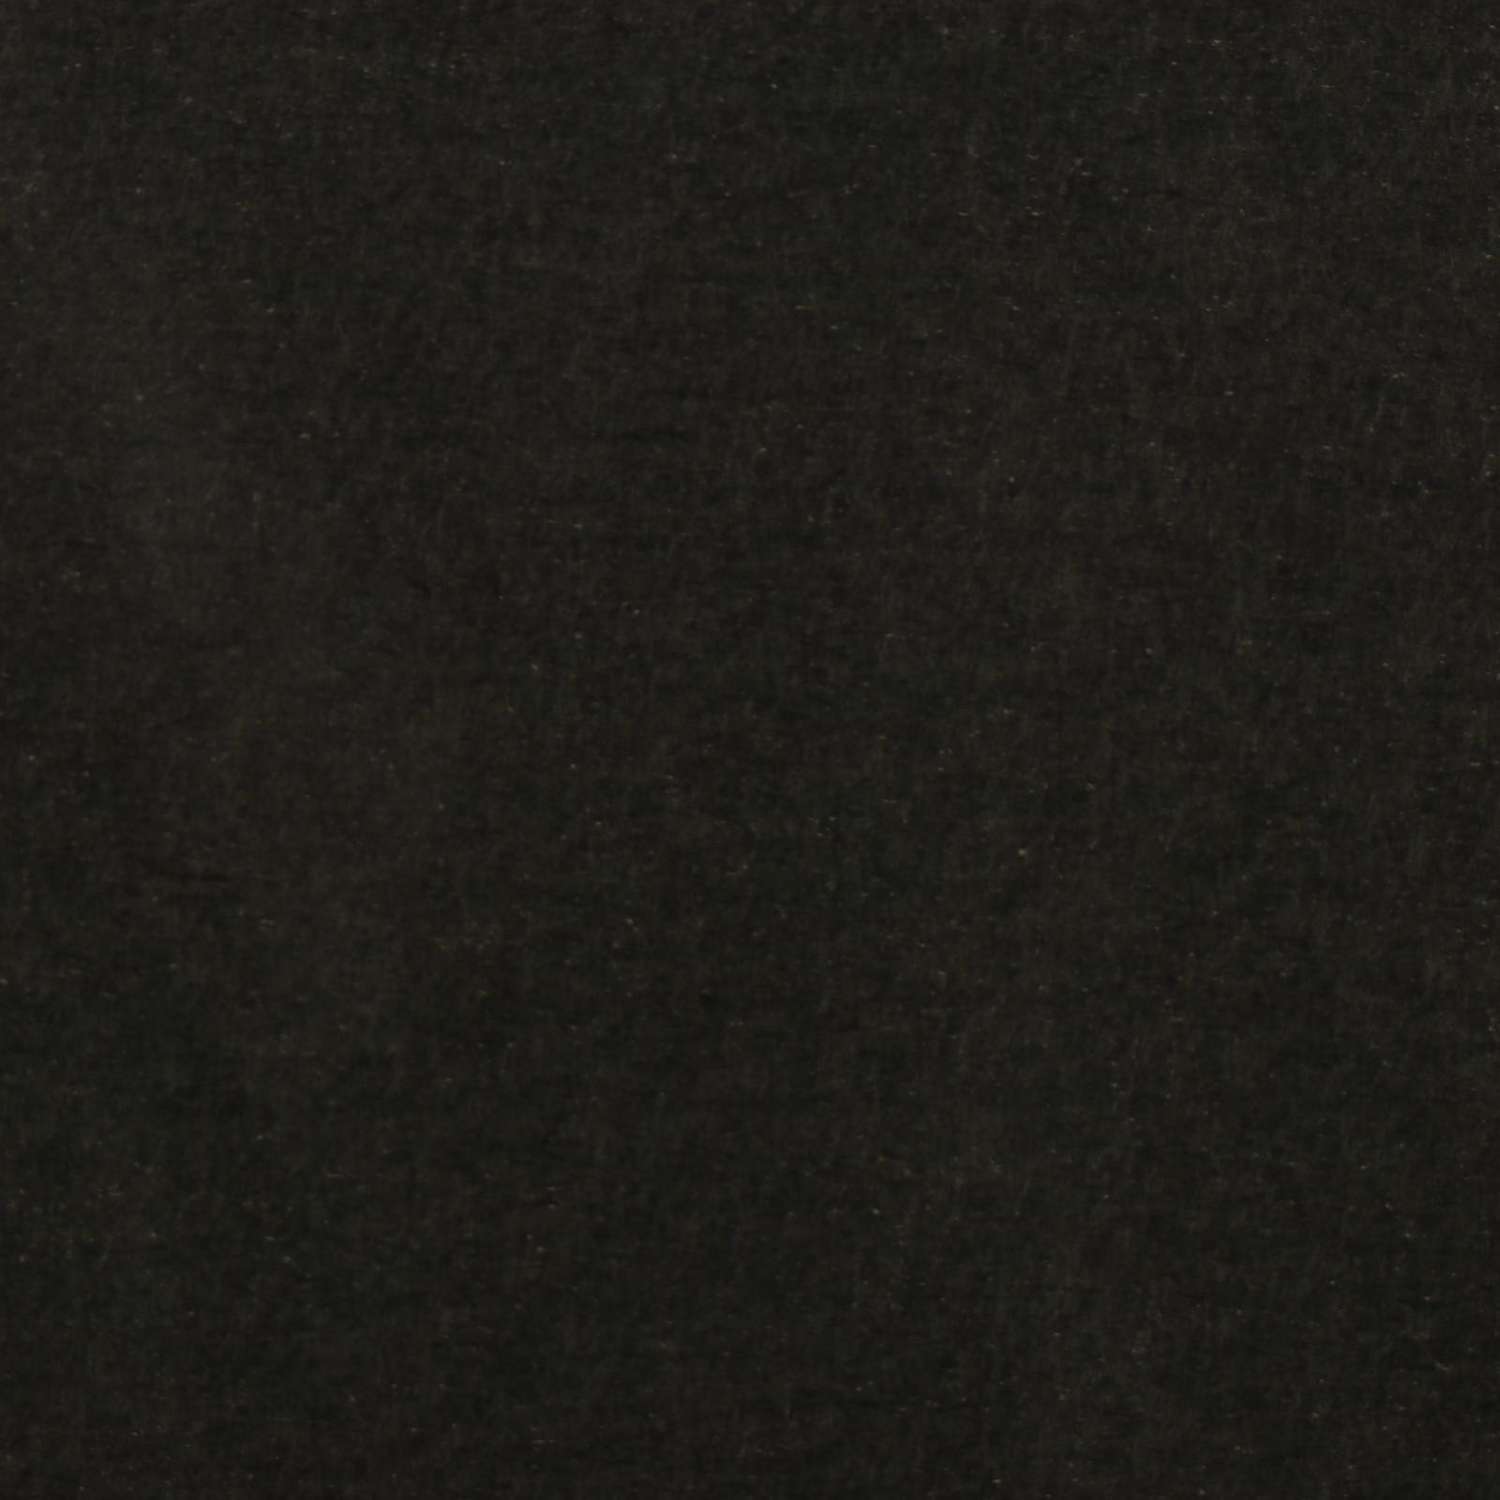 Бумага Sima-Land «Чёрный янтарь» черная однотонная односторонняя рулон 1шт. 0 7 х 10 м - фото 2